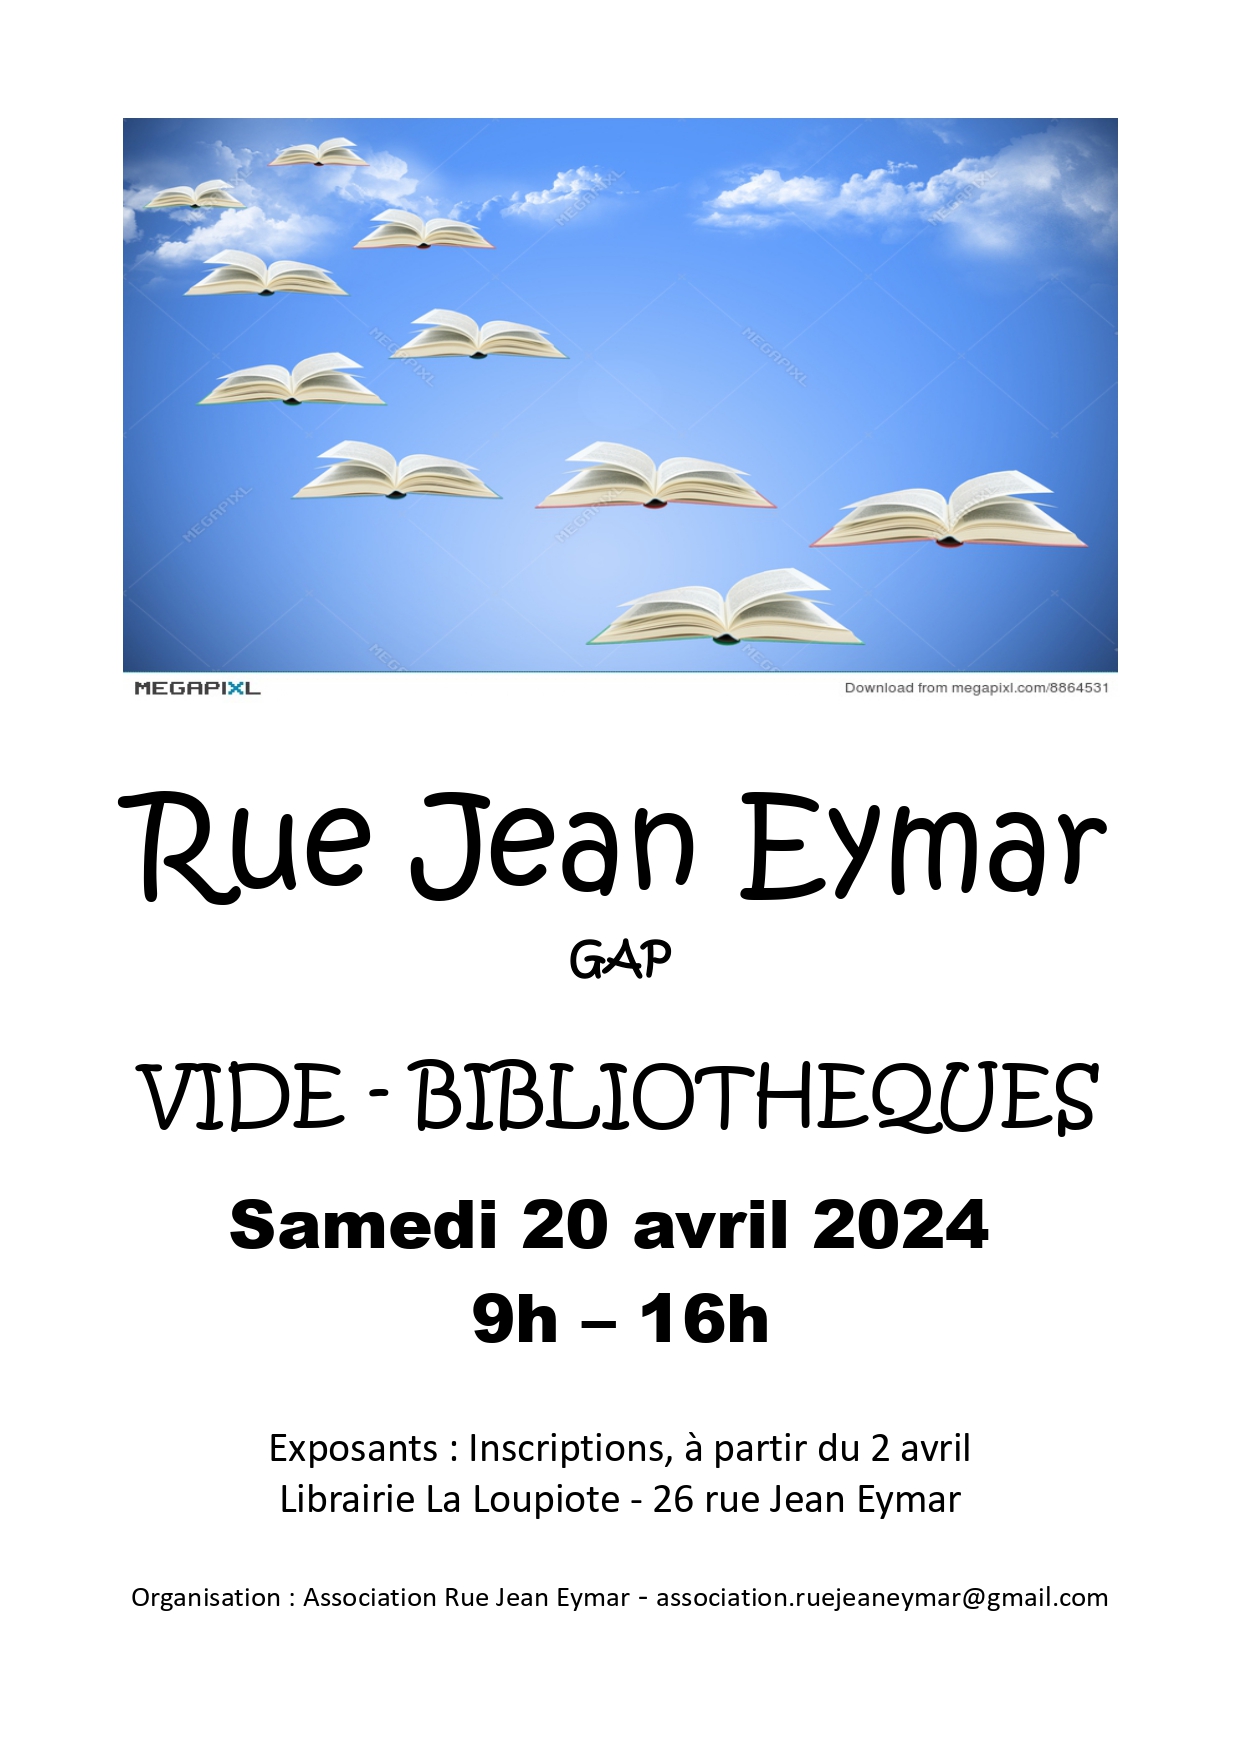 Vide-bibliothèques de la rue Jean Eymar